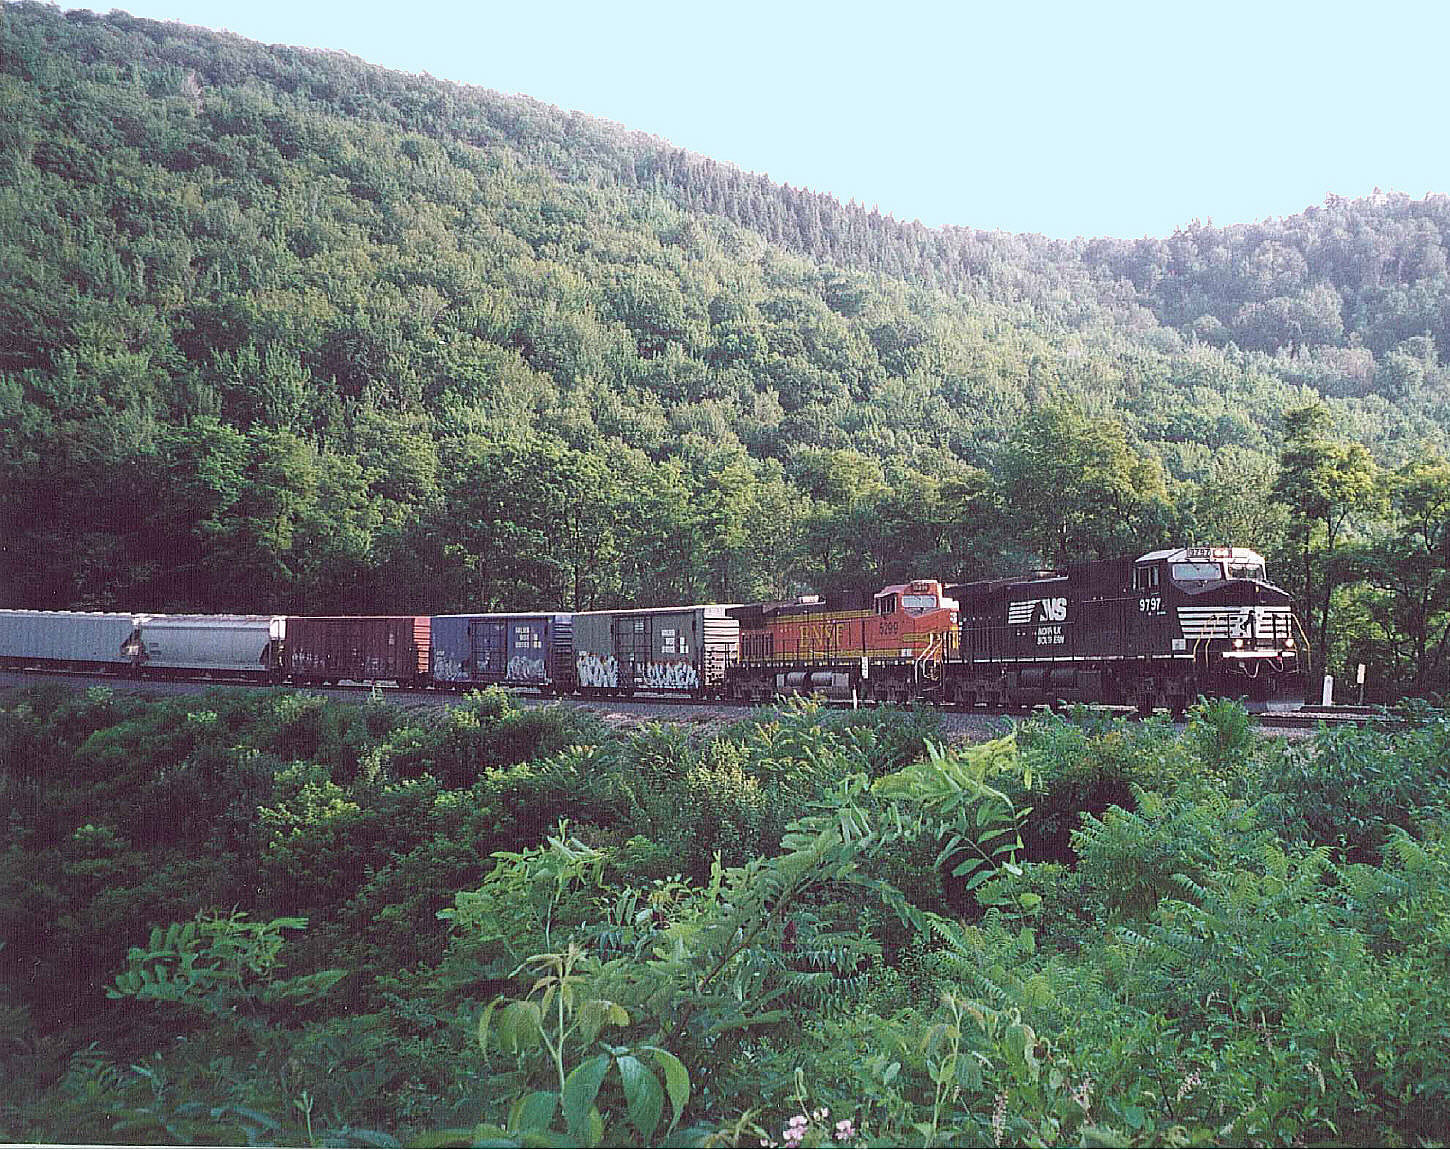 A modern freight train speeds through the Curve